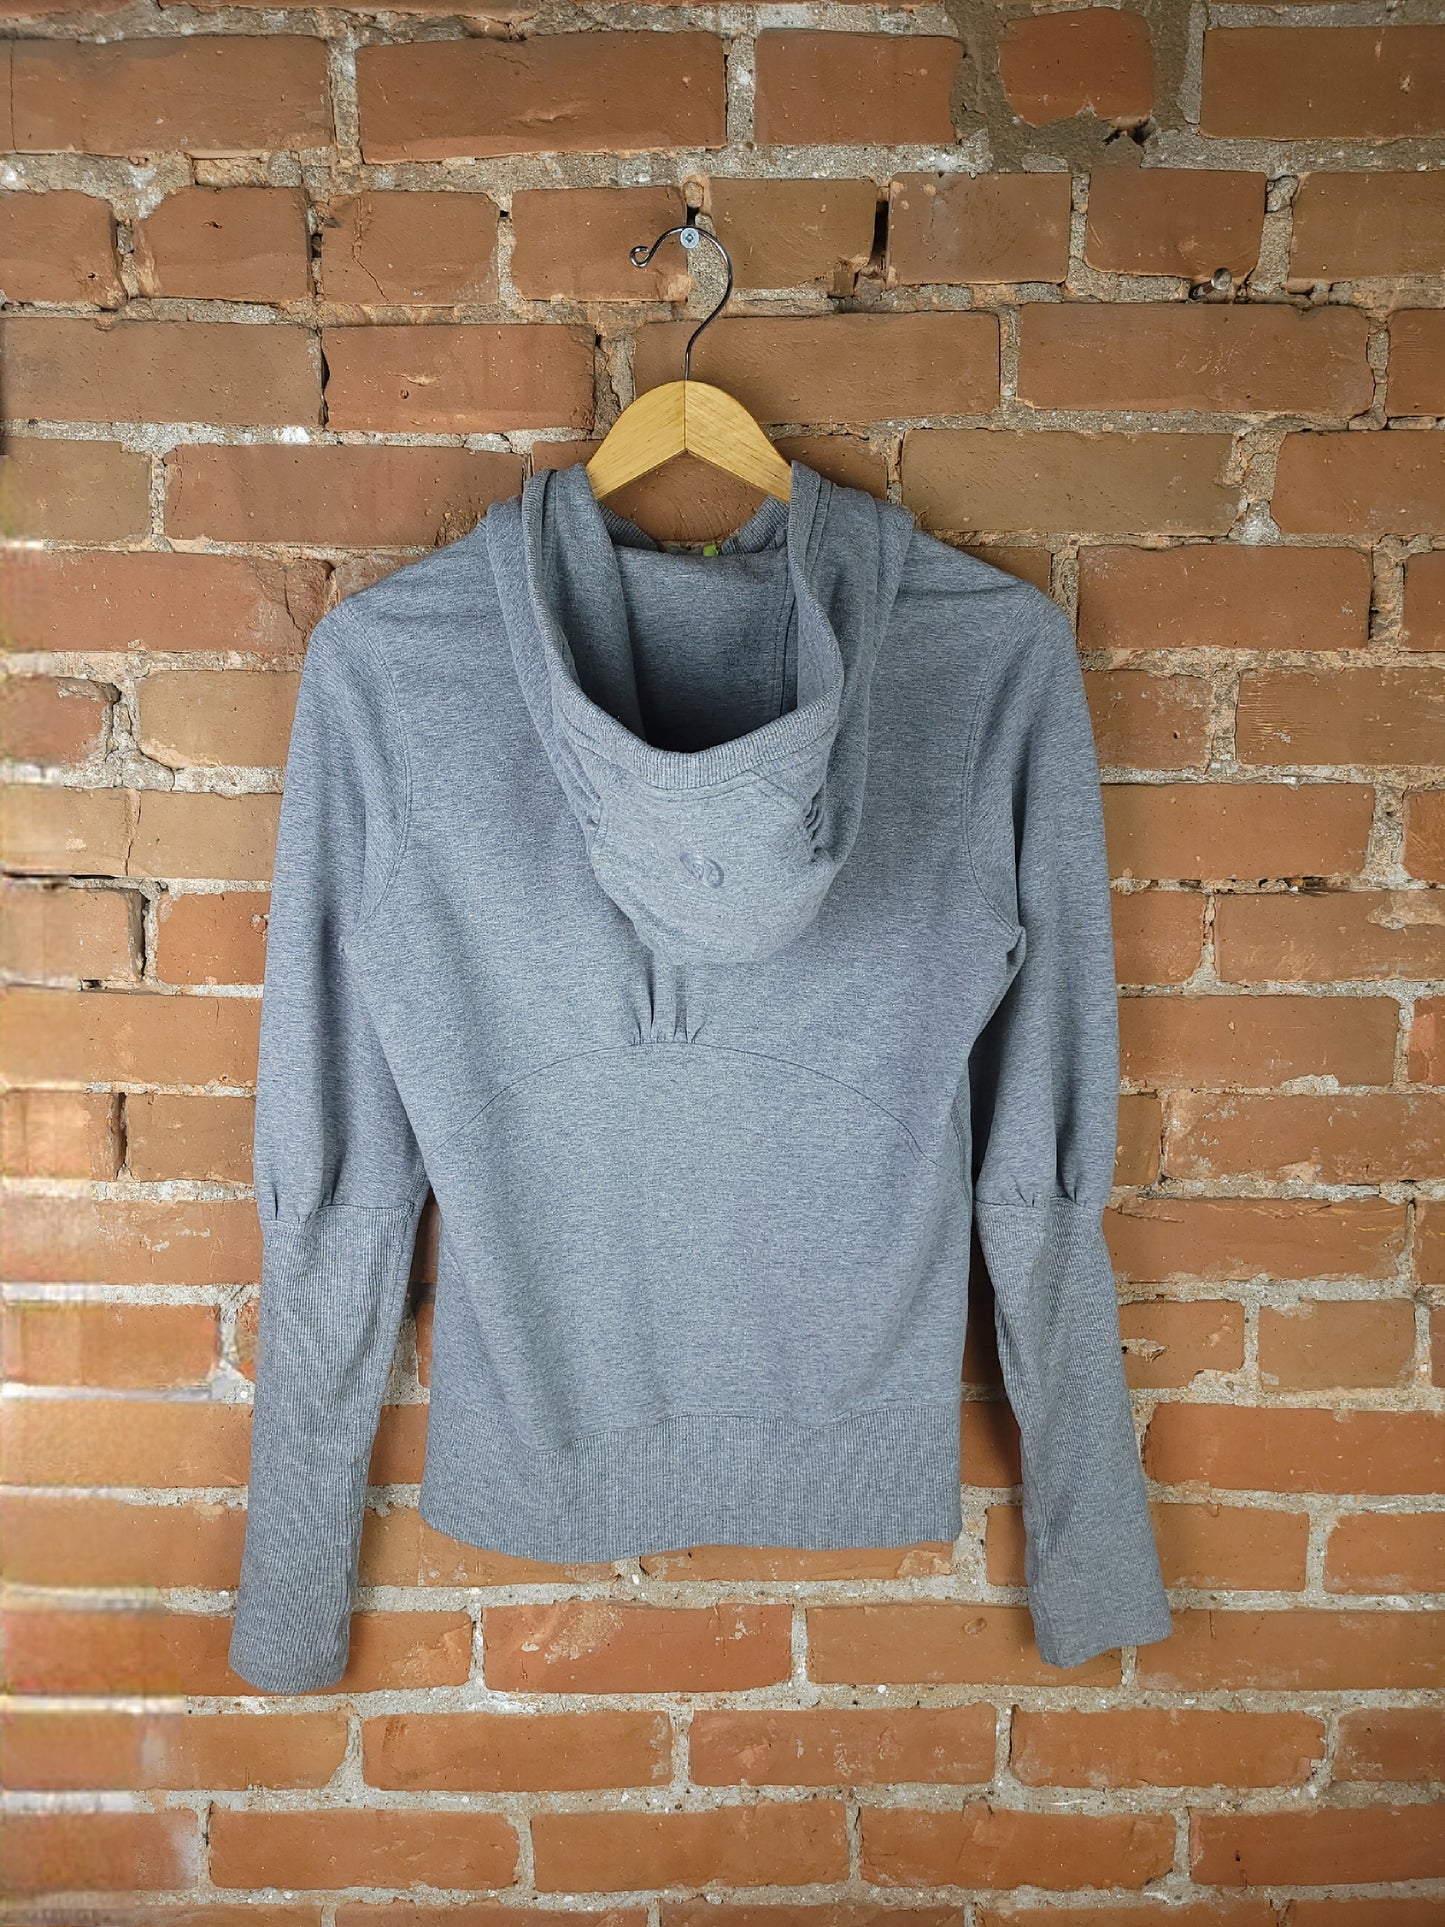 Lululemon Gray Zip Sweater